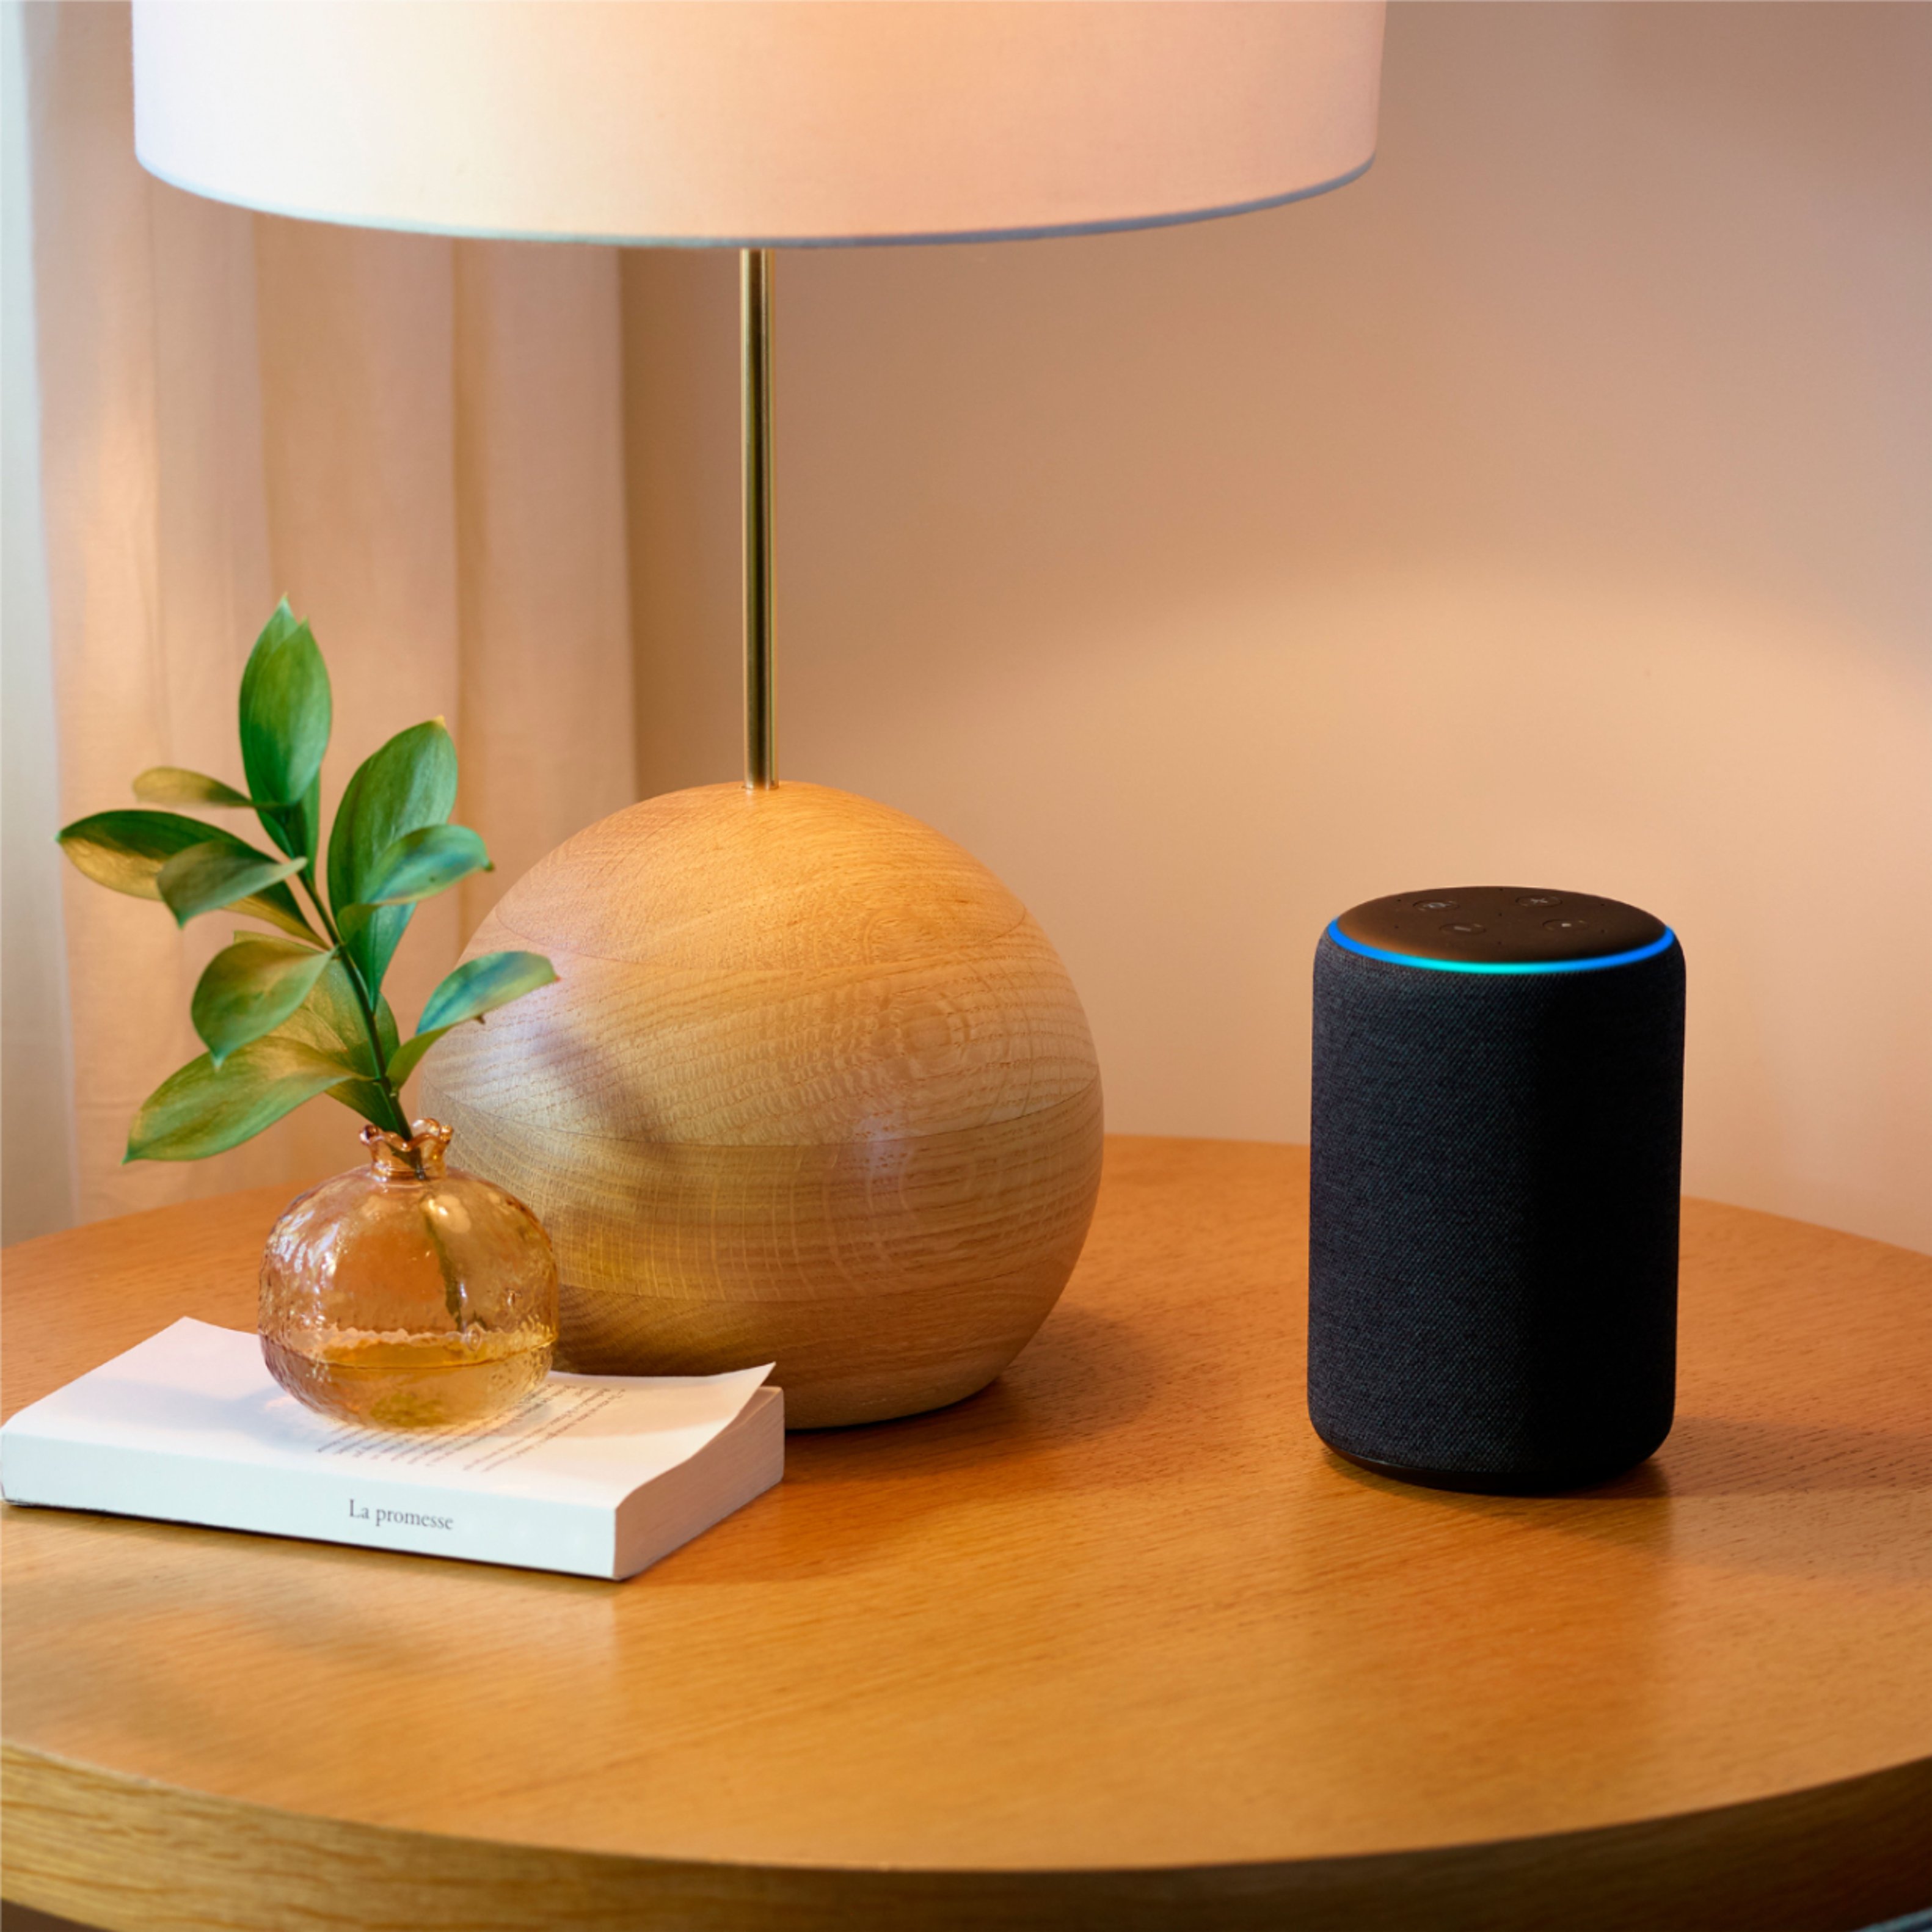 Echo 3rd generation Smart speaker with Alexa